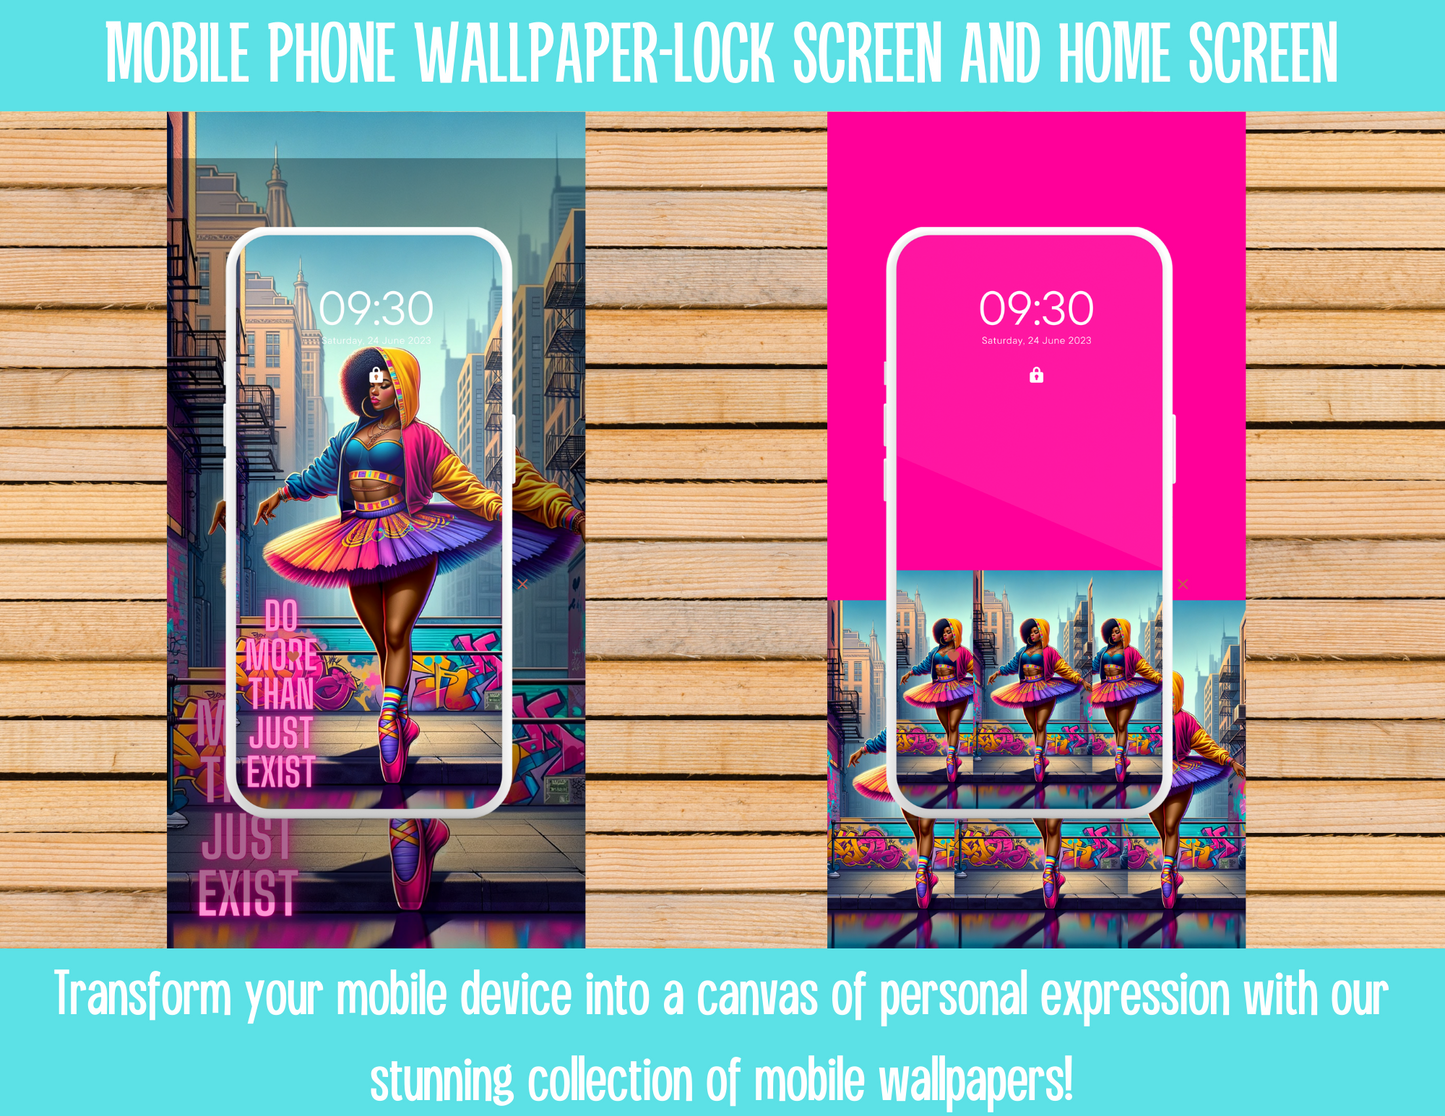 Hip Hop Ballerina Mobile Phone Wallpaper- Lock Screen and Home Screen